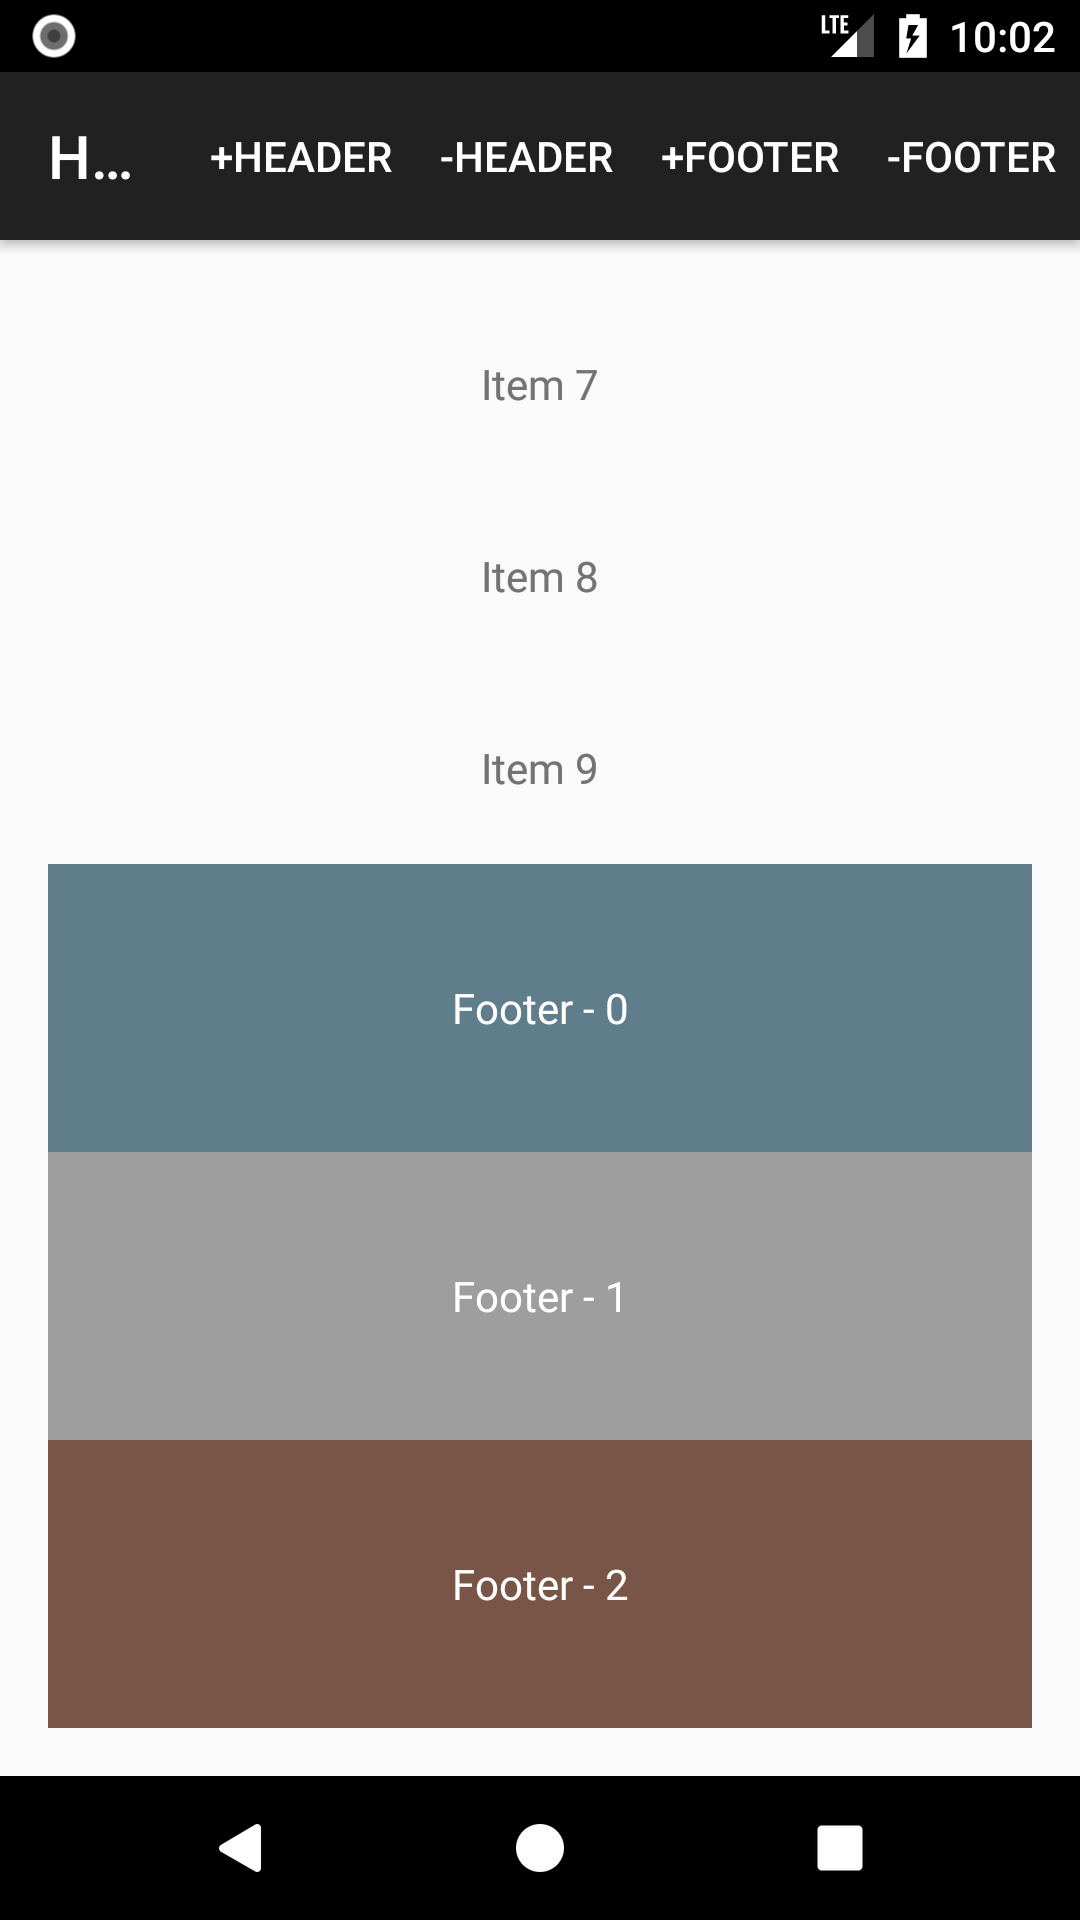 Screenshot 1 - Header/Footer (Add/Remove items)